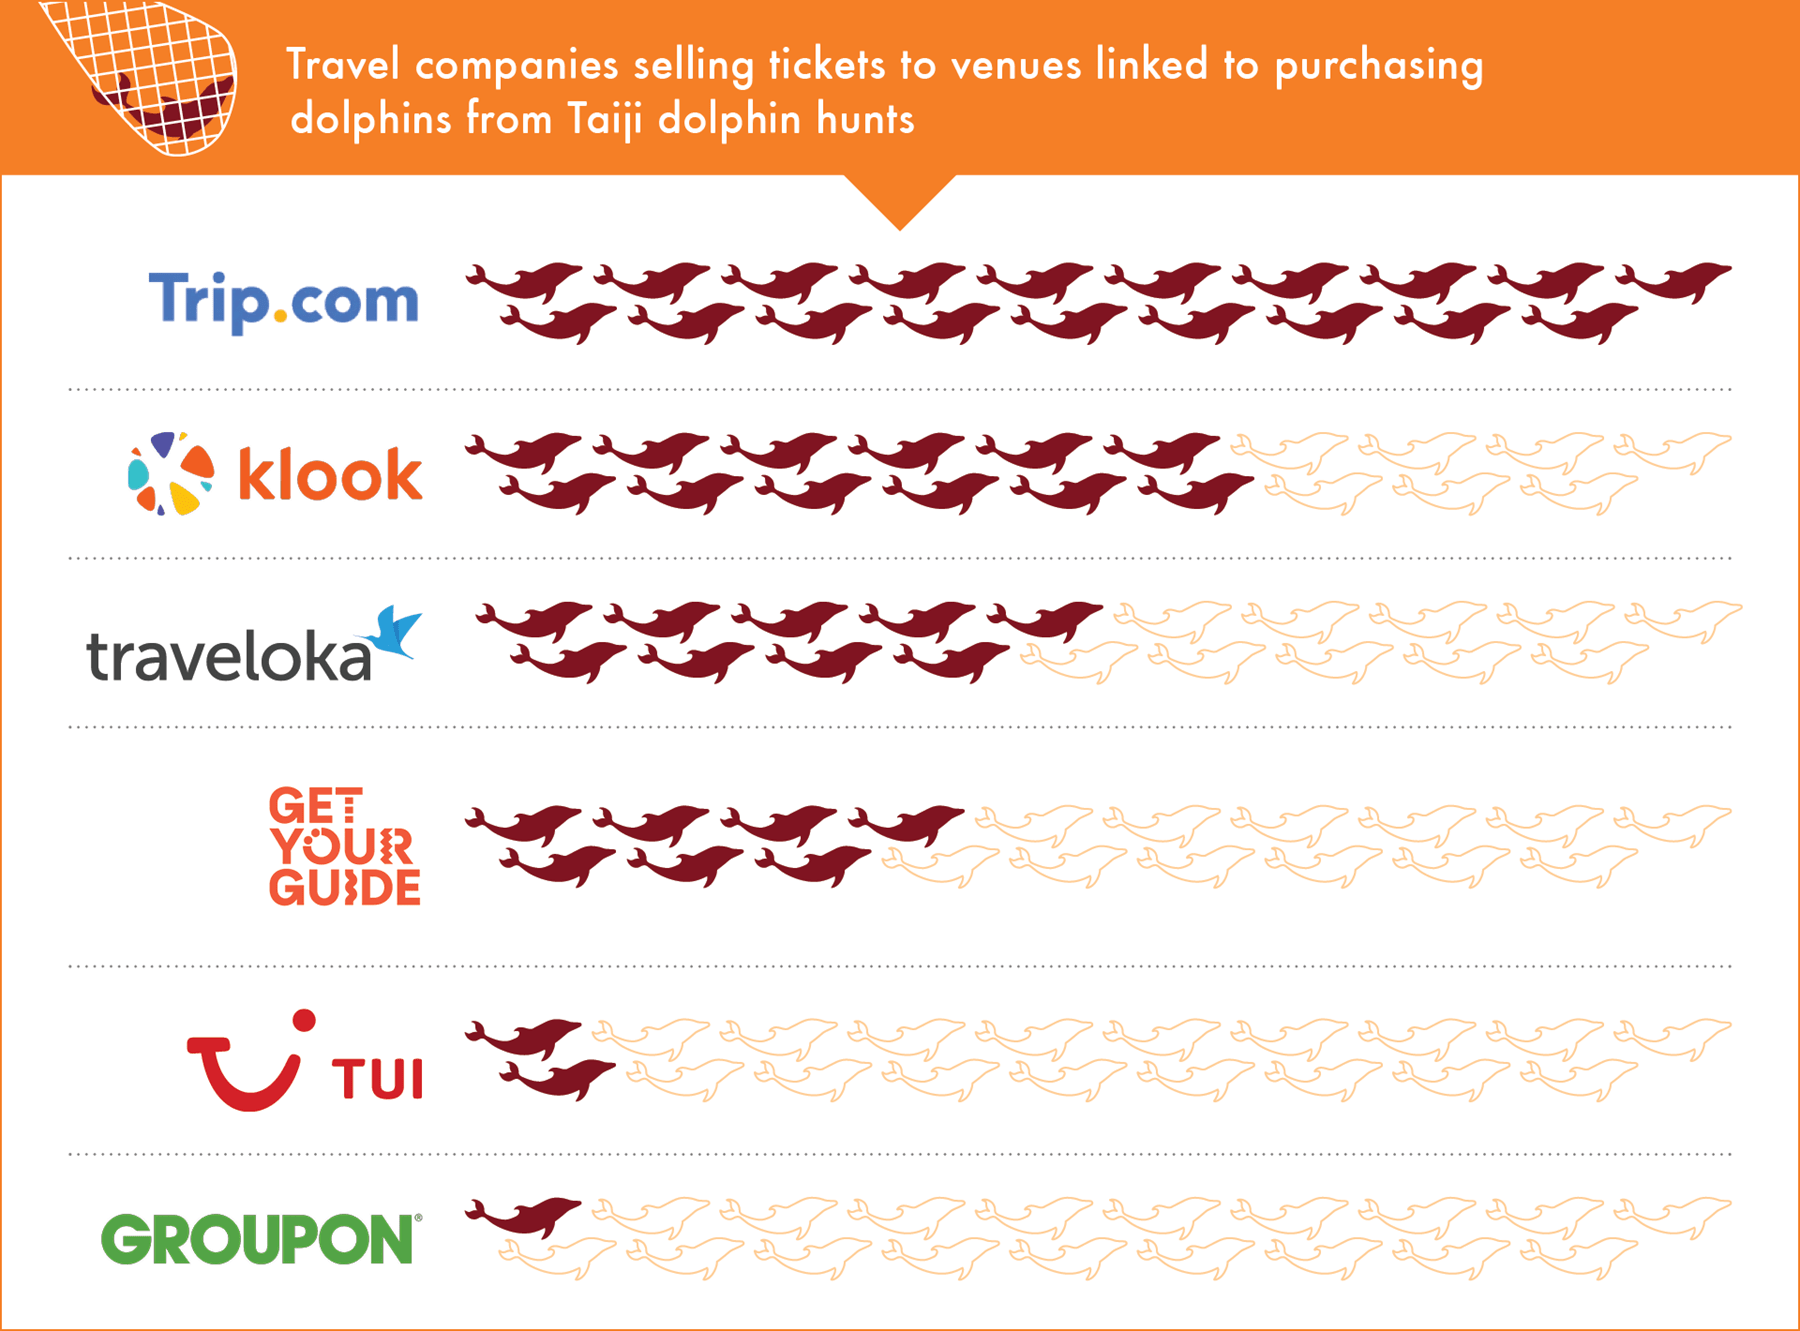 Companies linked to Taiji dolphins